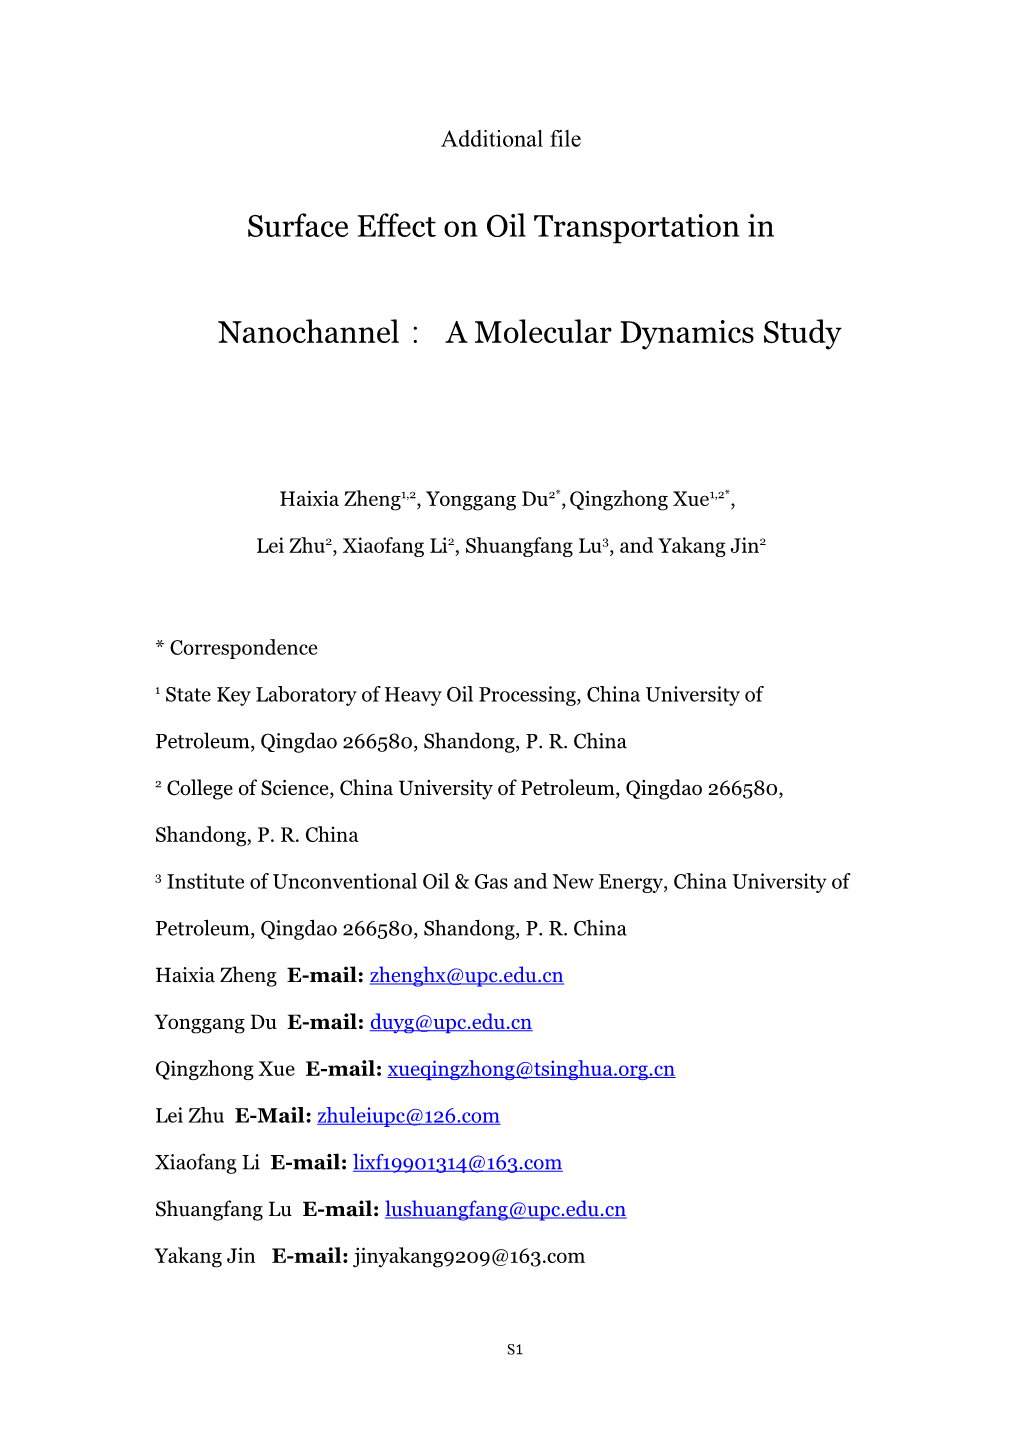 Surface Effect on Oil Transportation in Nanochannel a Molecular Dynamics Study